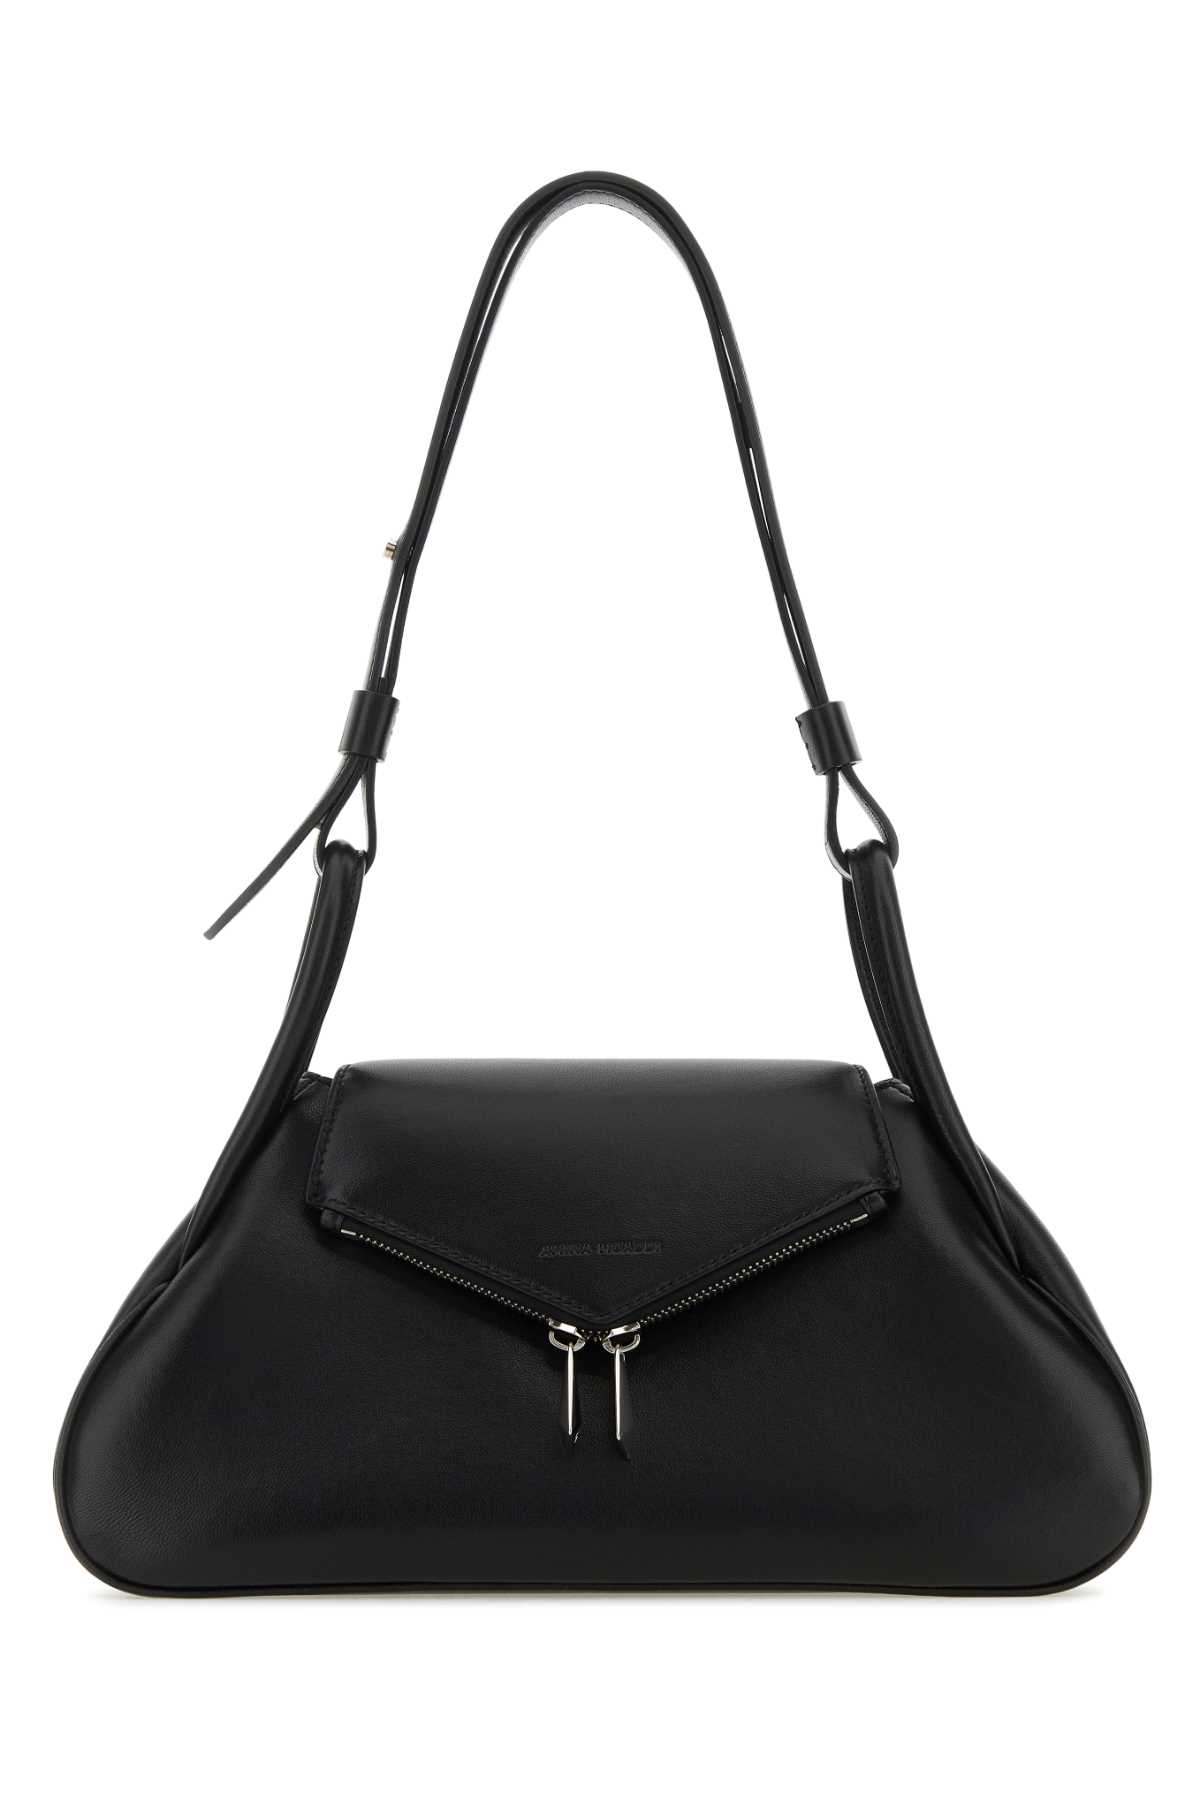 Amina Muaddi Black Nappa Leather Gemini Shoulder Bag